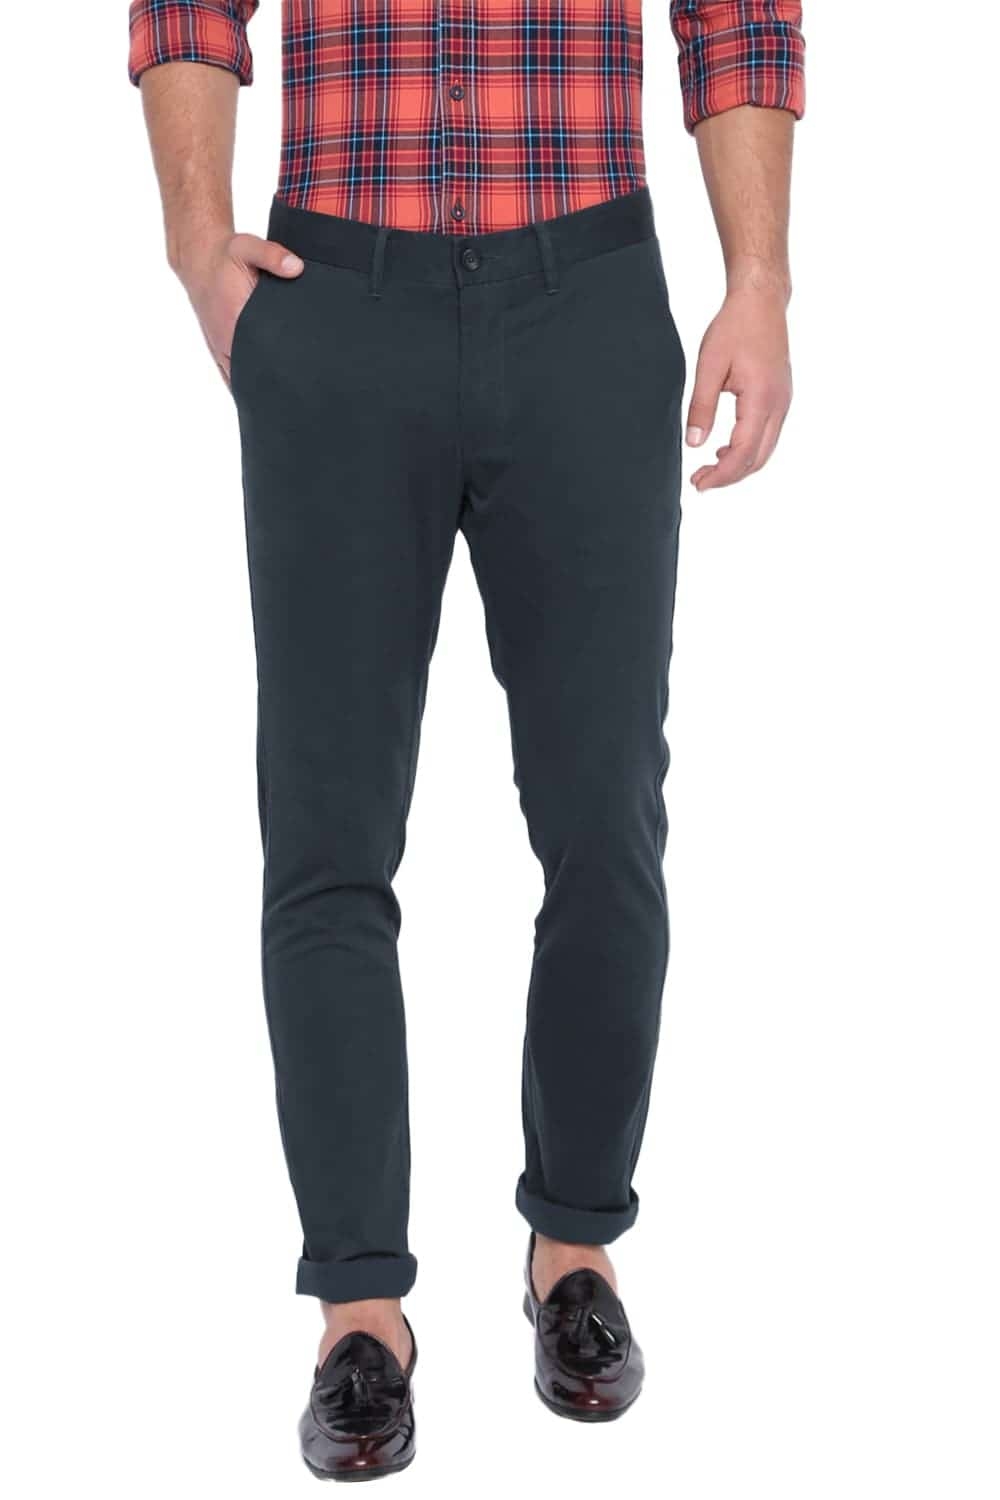 Basics | Basics Tapered Fit Orion Blue Stretch Trouser